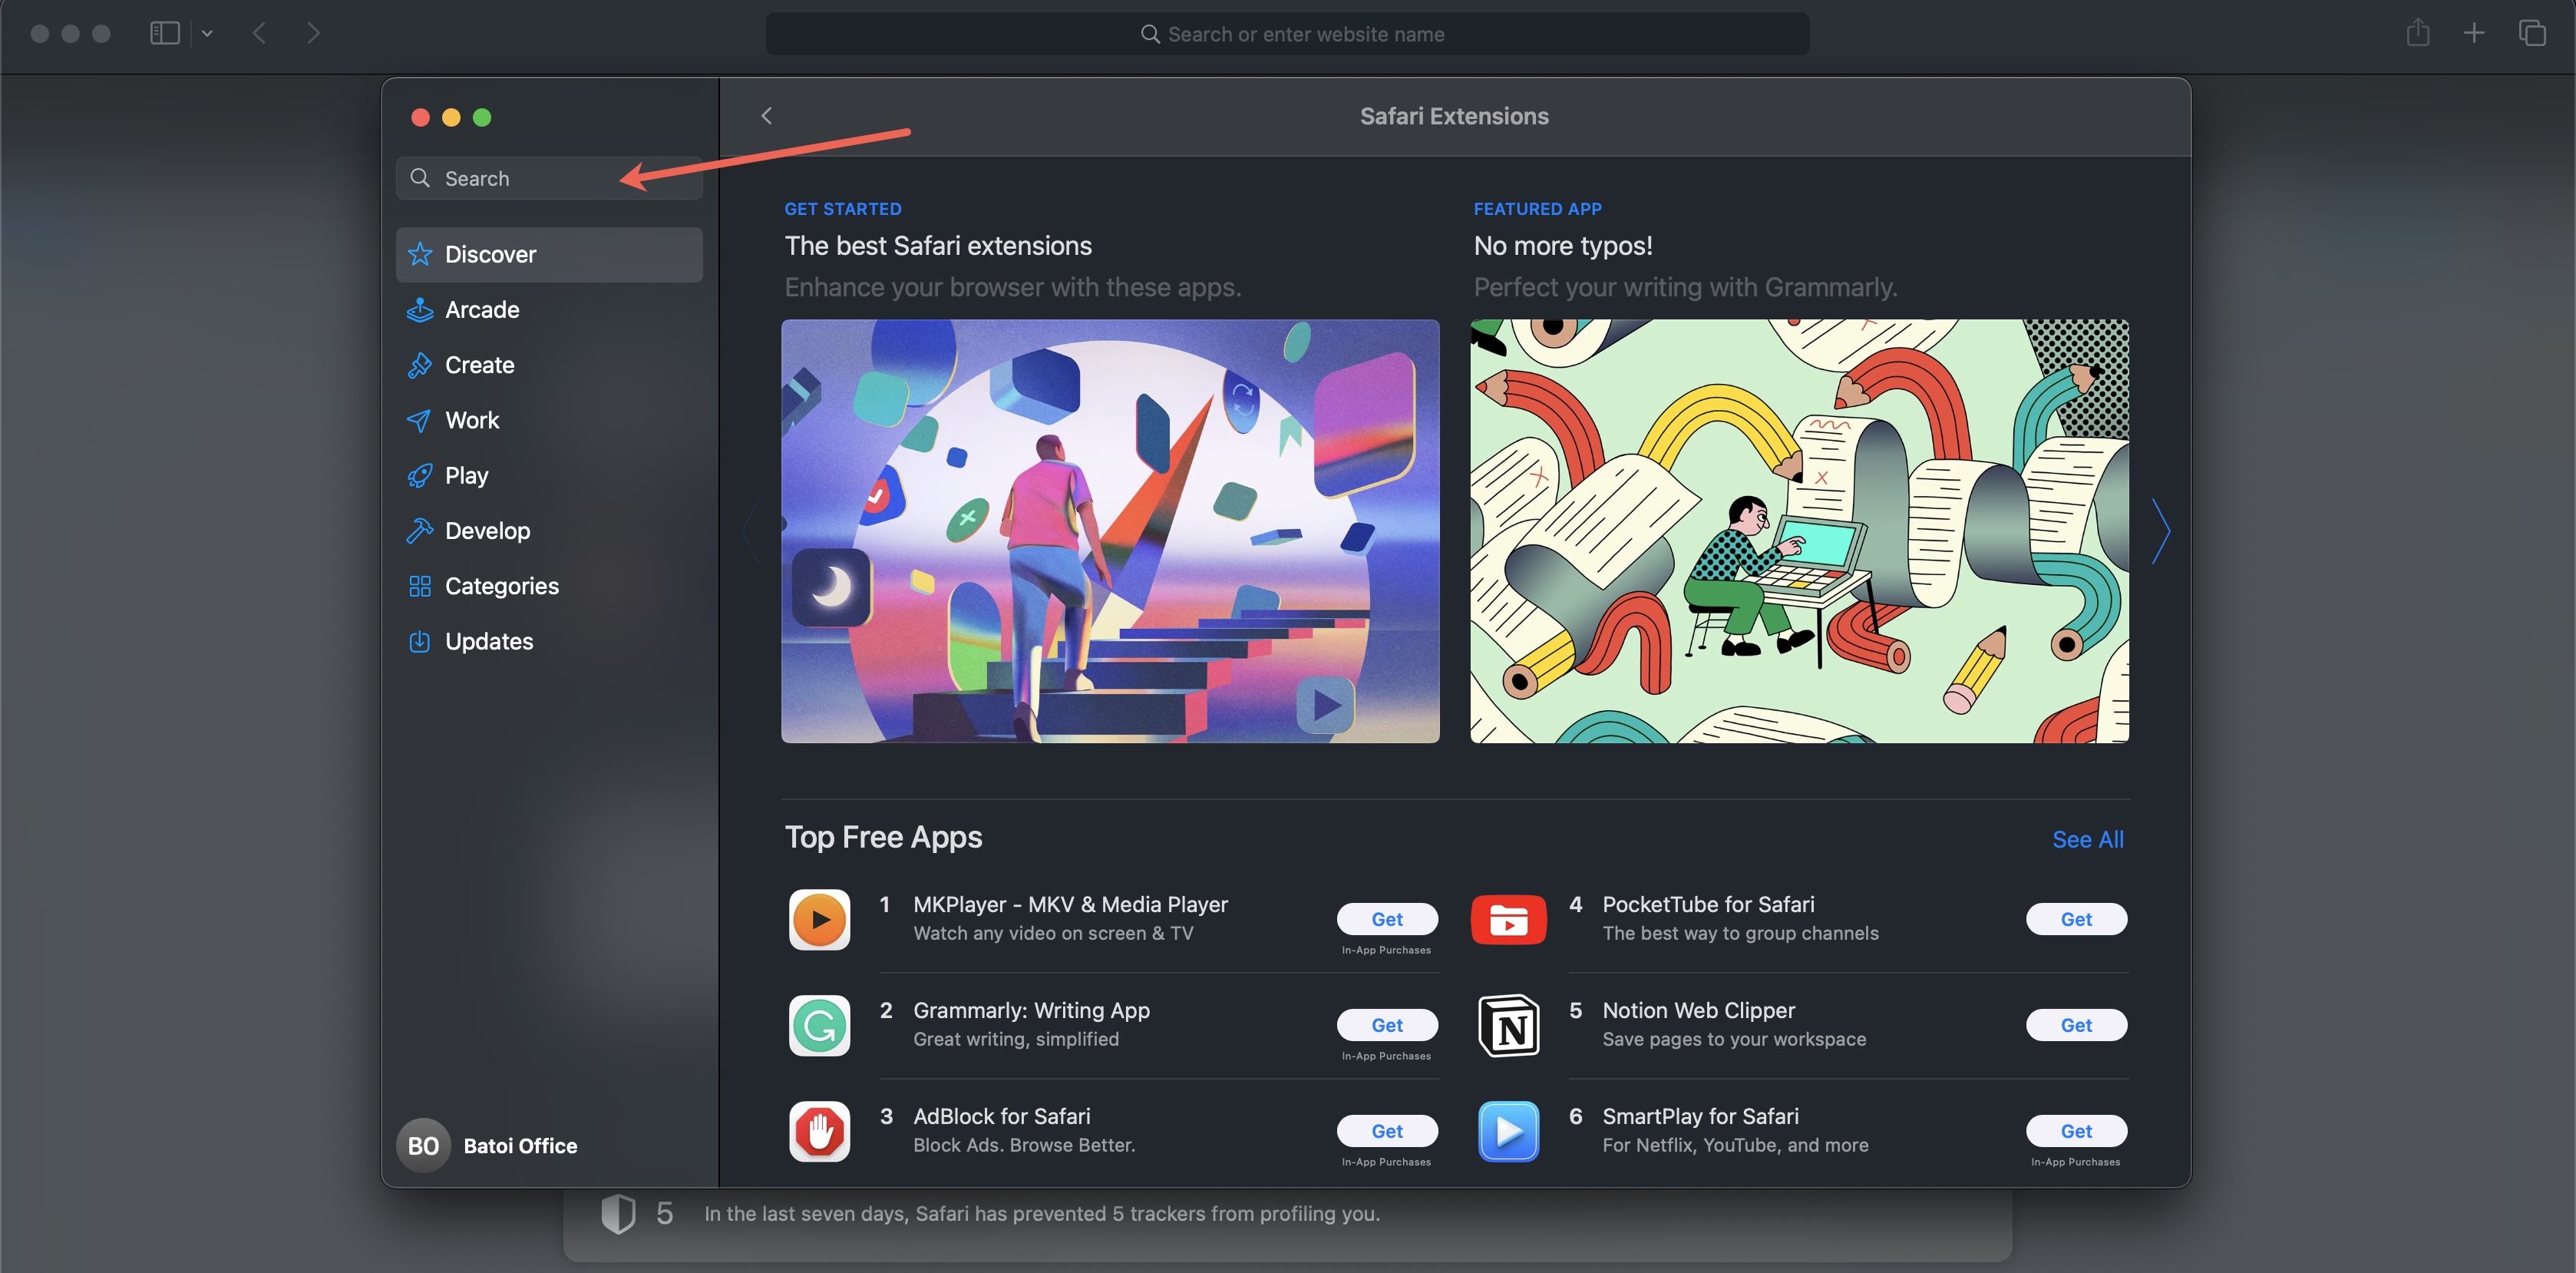 Figure 2: Safari App Store Dashboard Screen